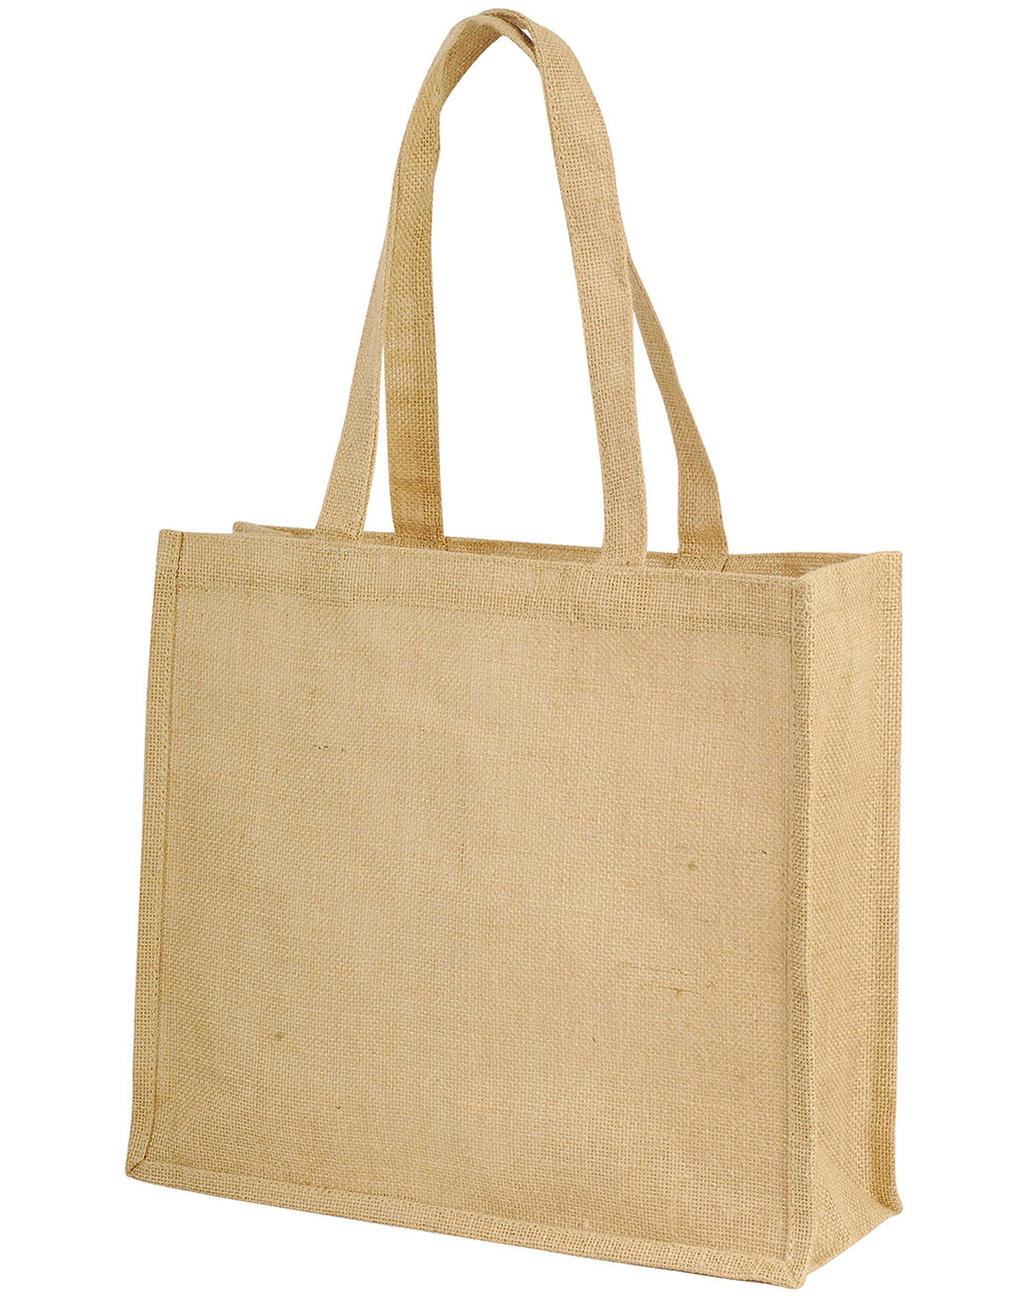  Calcutta Long Handled Jute Shopper Bag in Farbe Natural